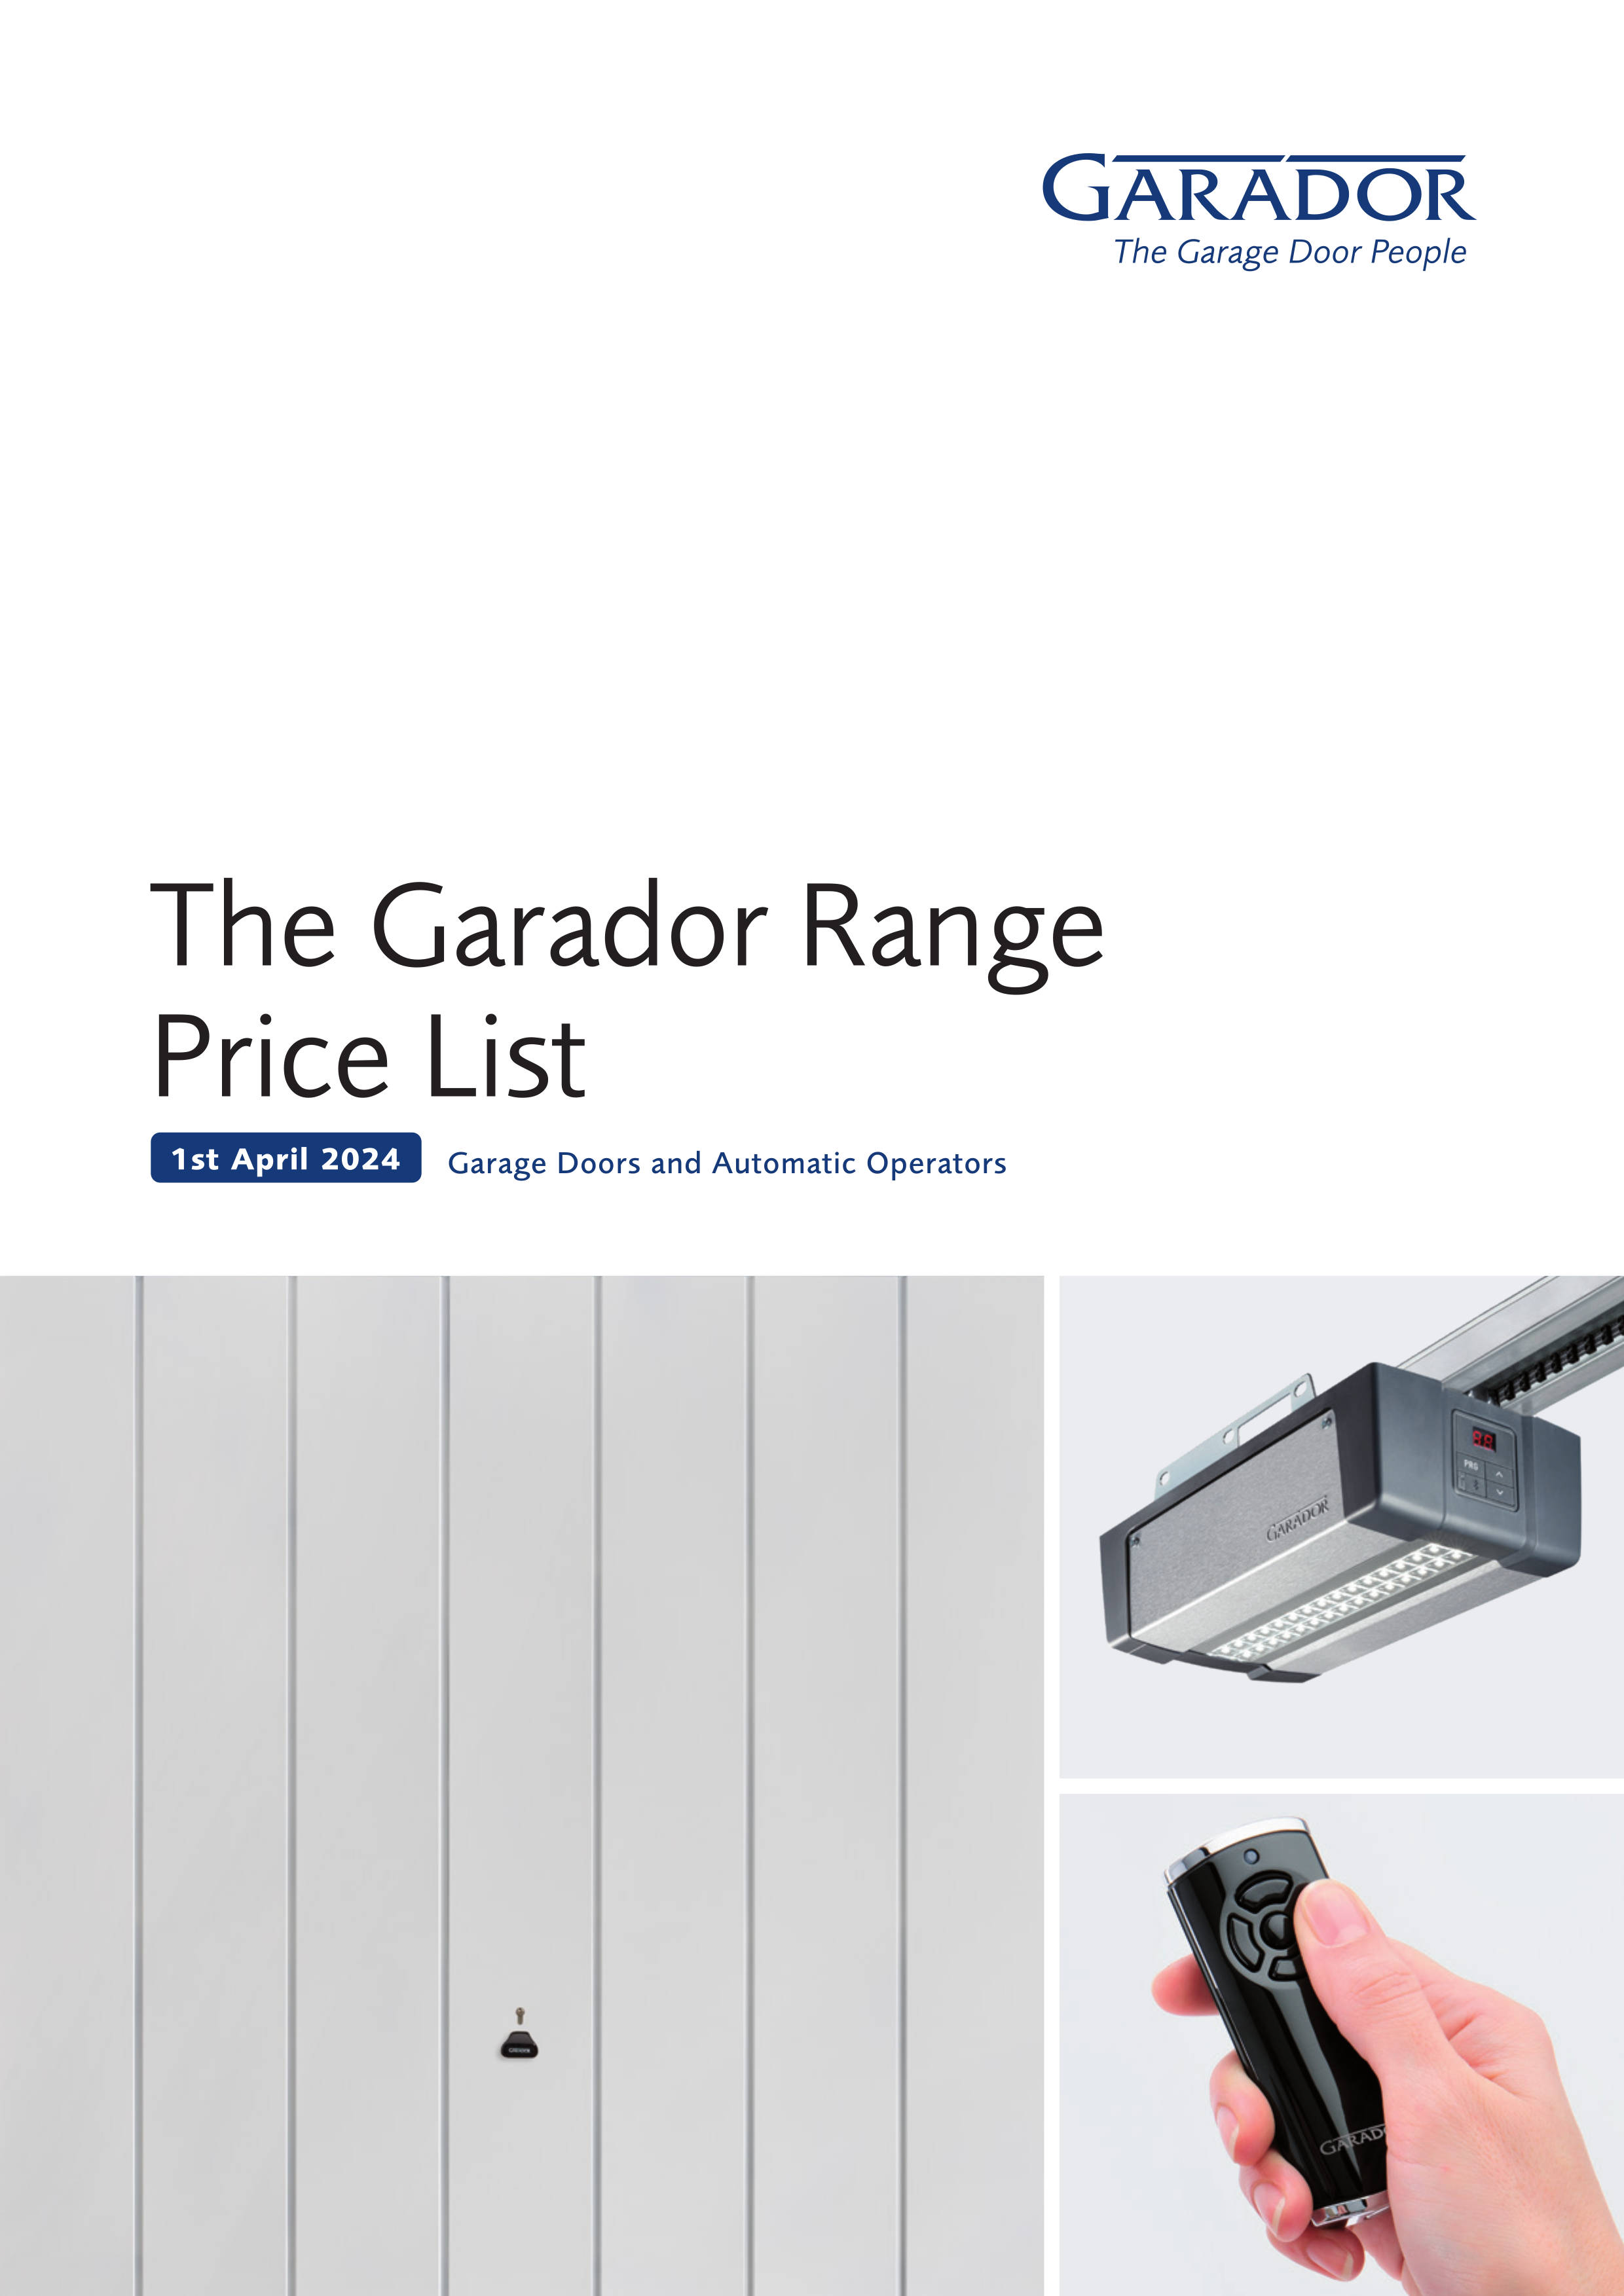 The Garador Range Price List